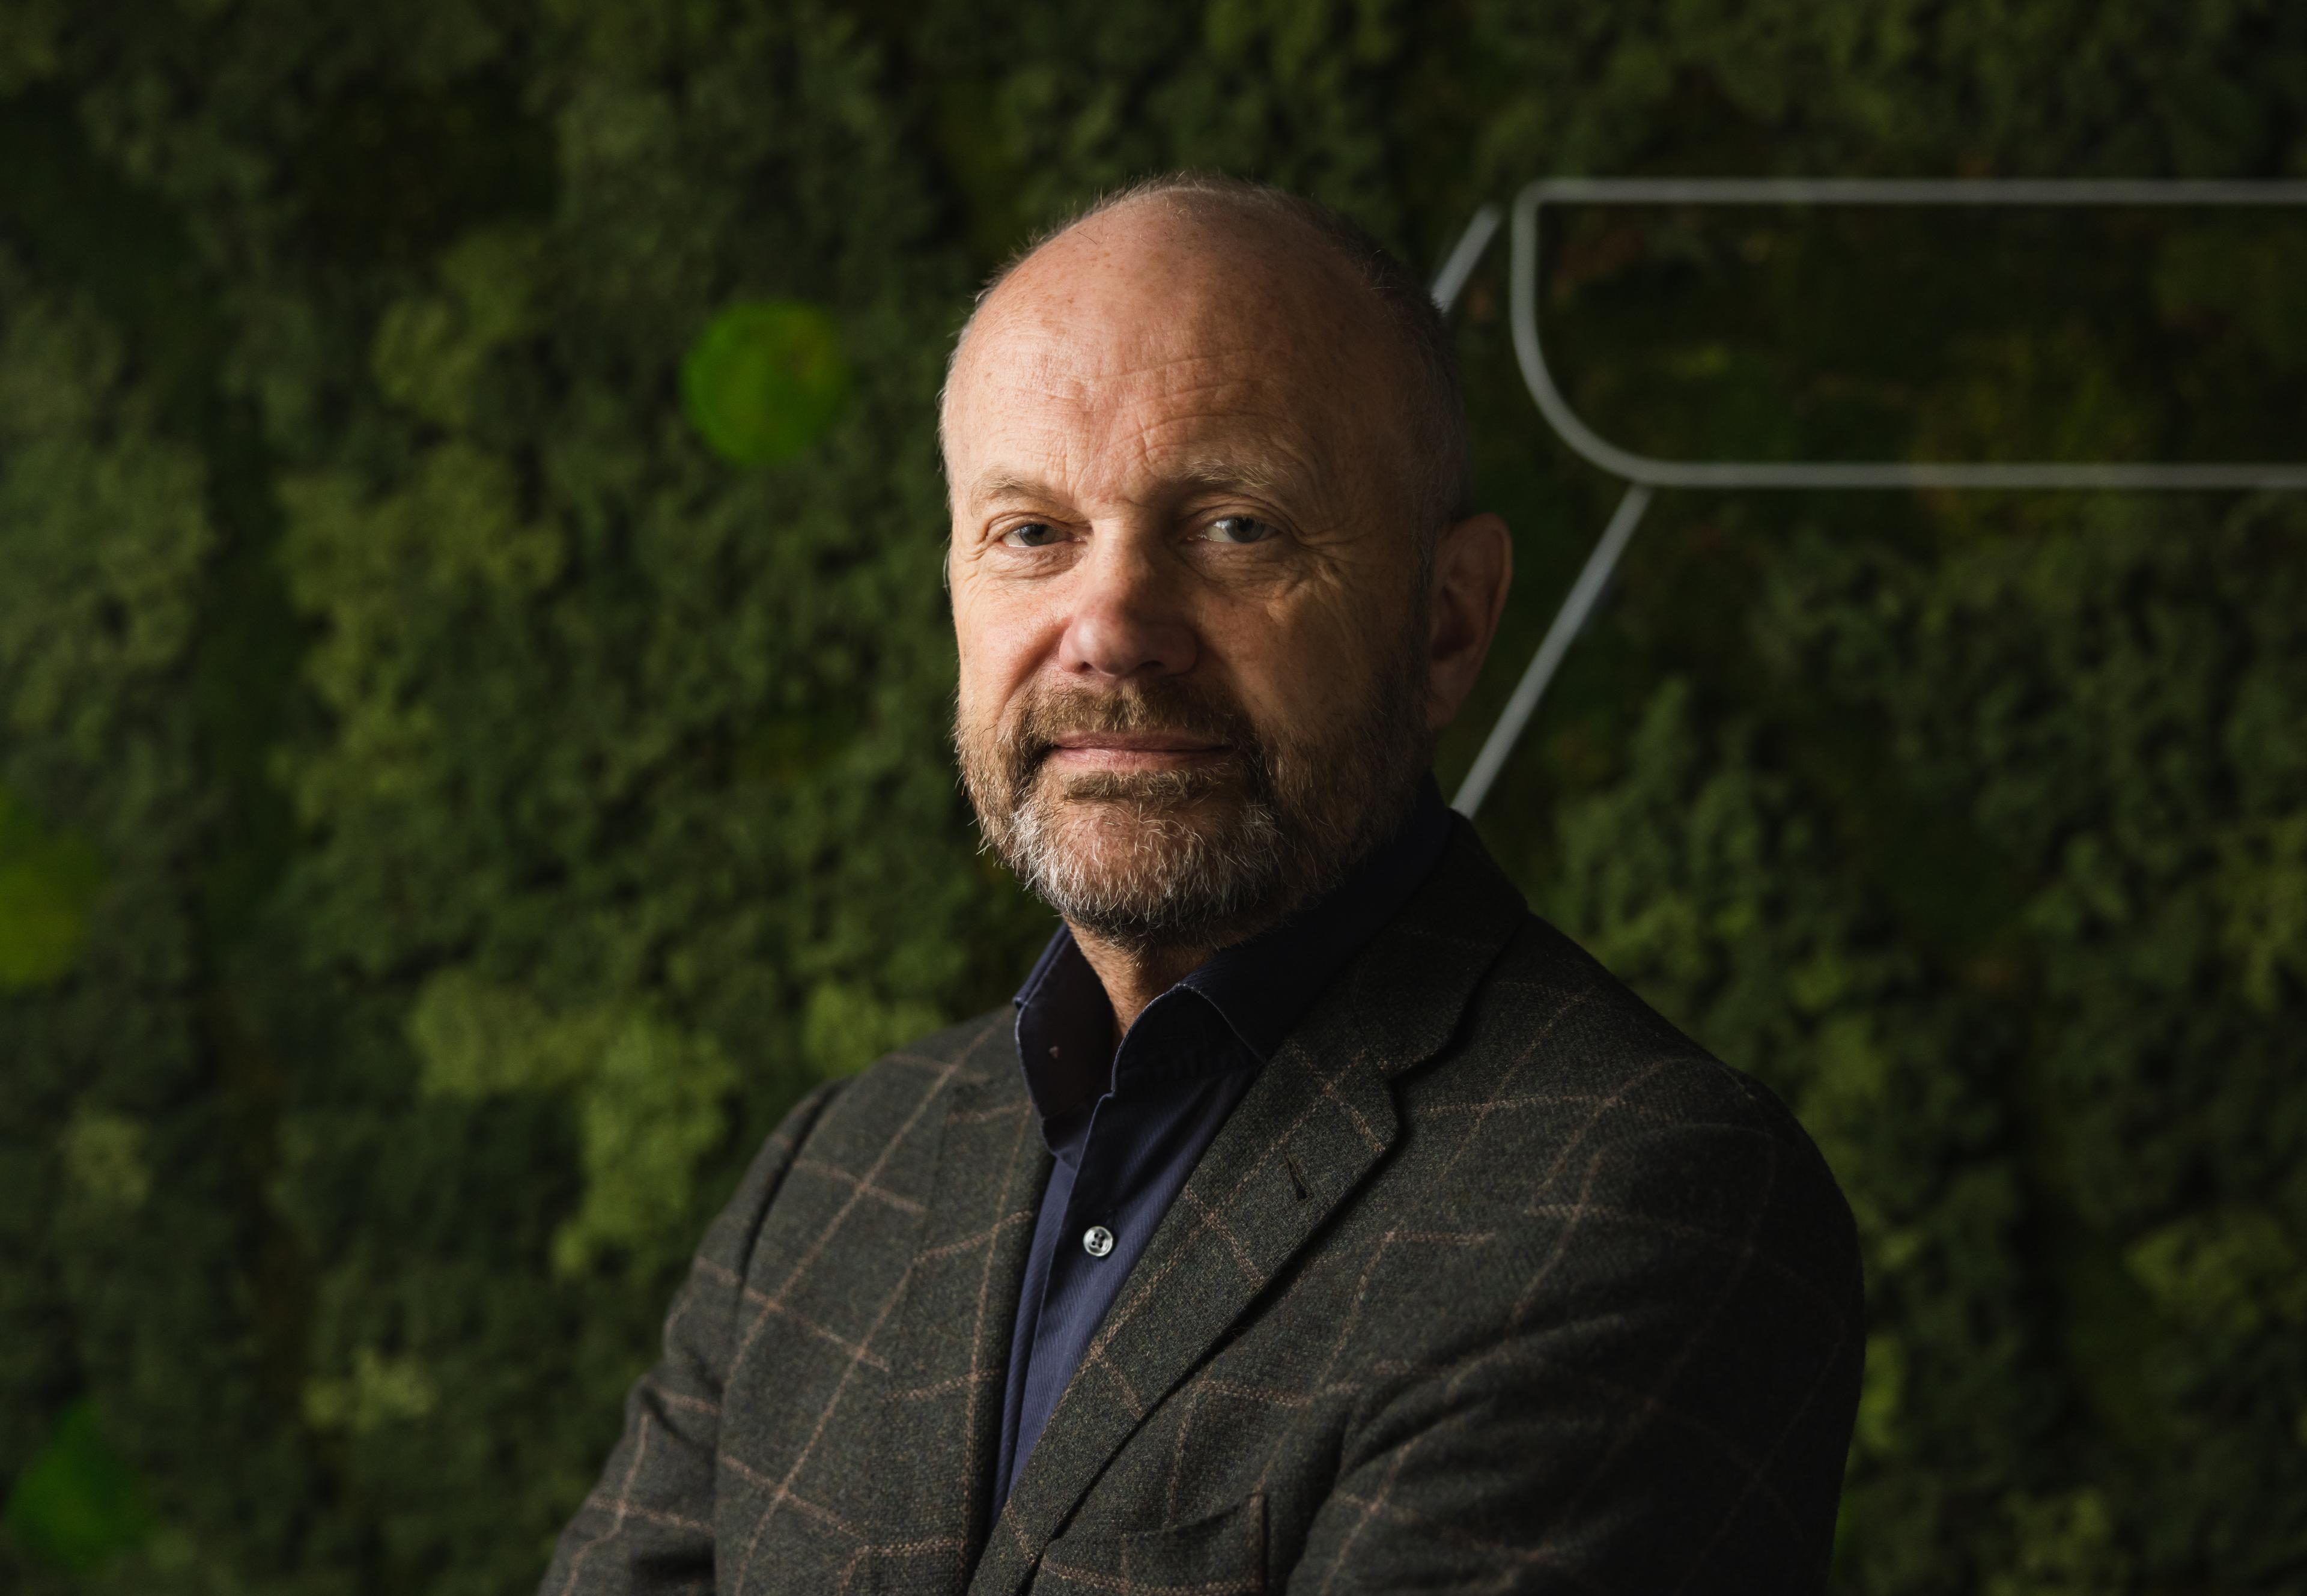 Odd Strømsnes, CEO of Bergen Carbon Solutions